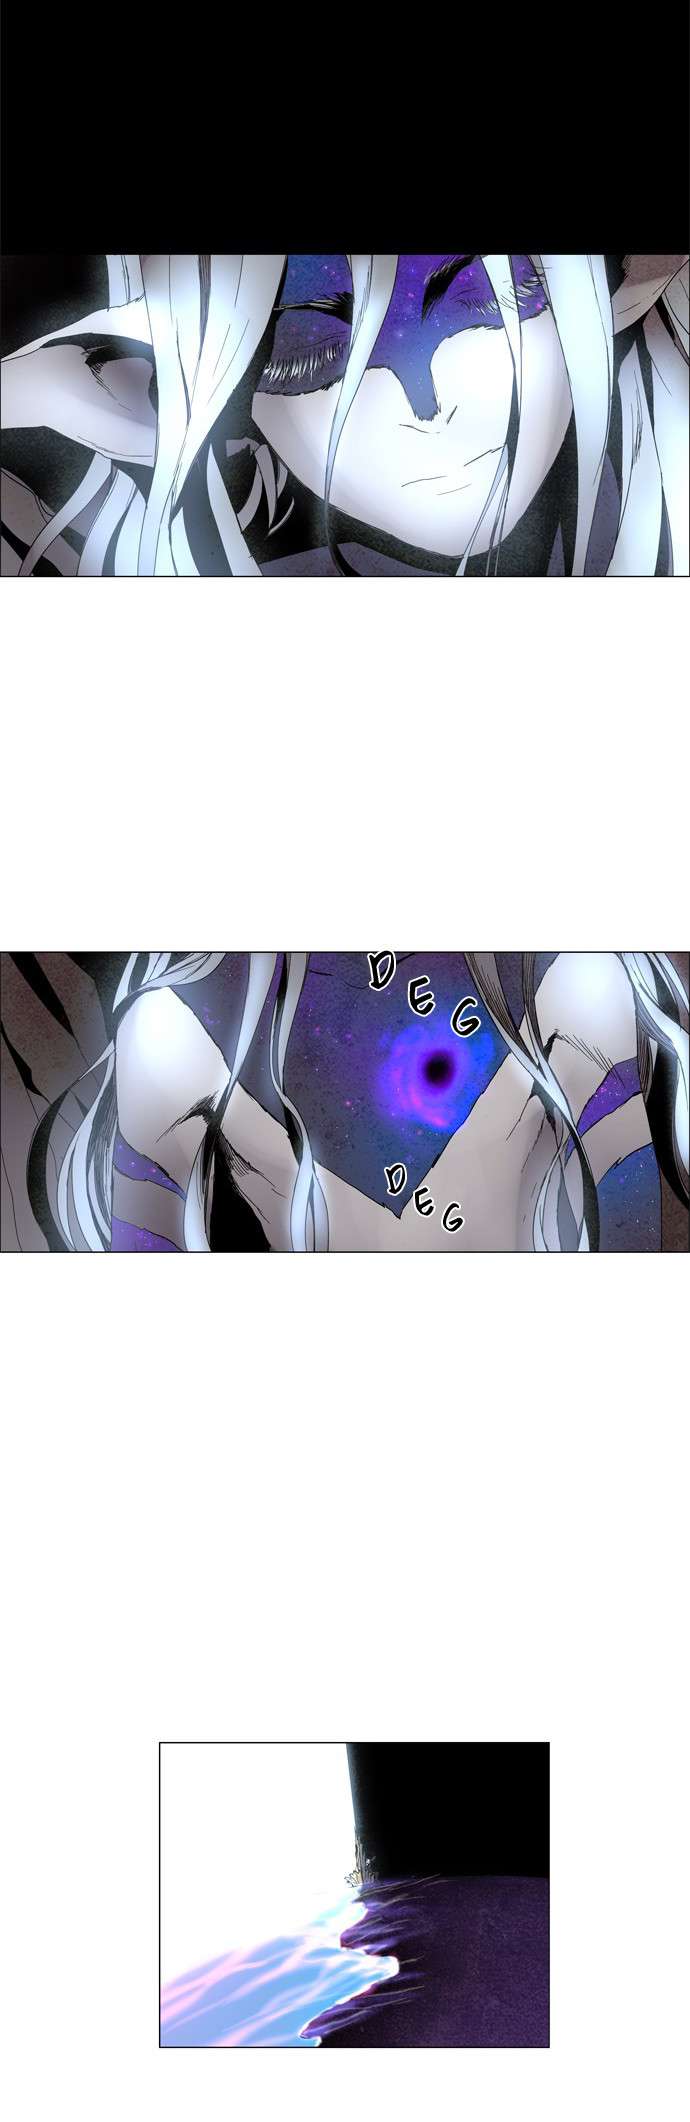 LESSA – Servant of Cosmos Chapter 0